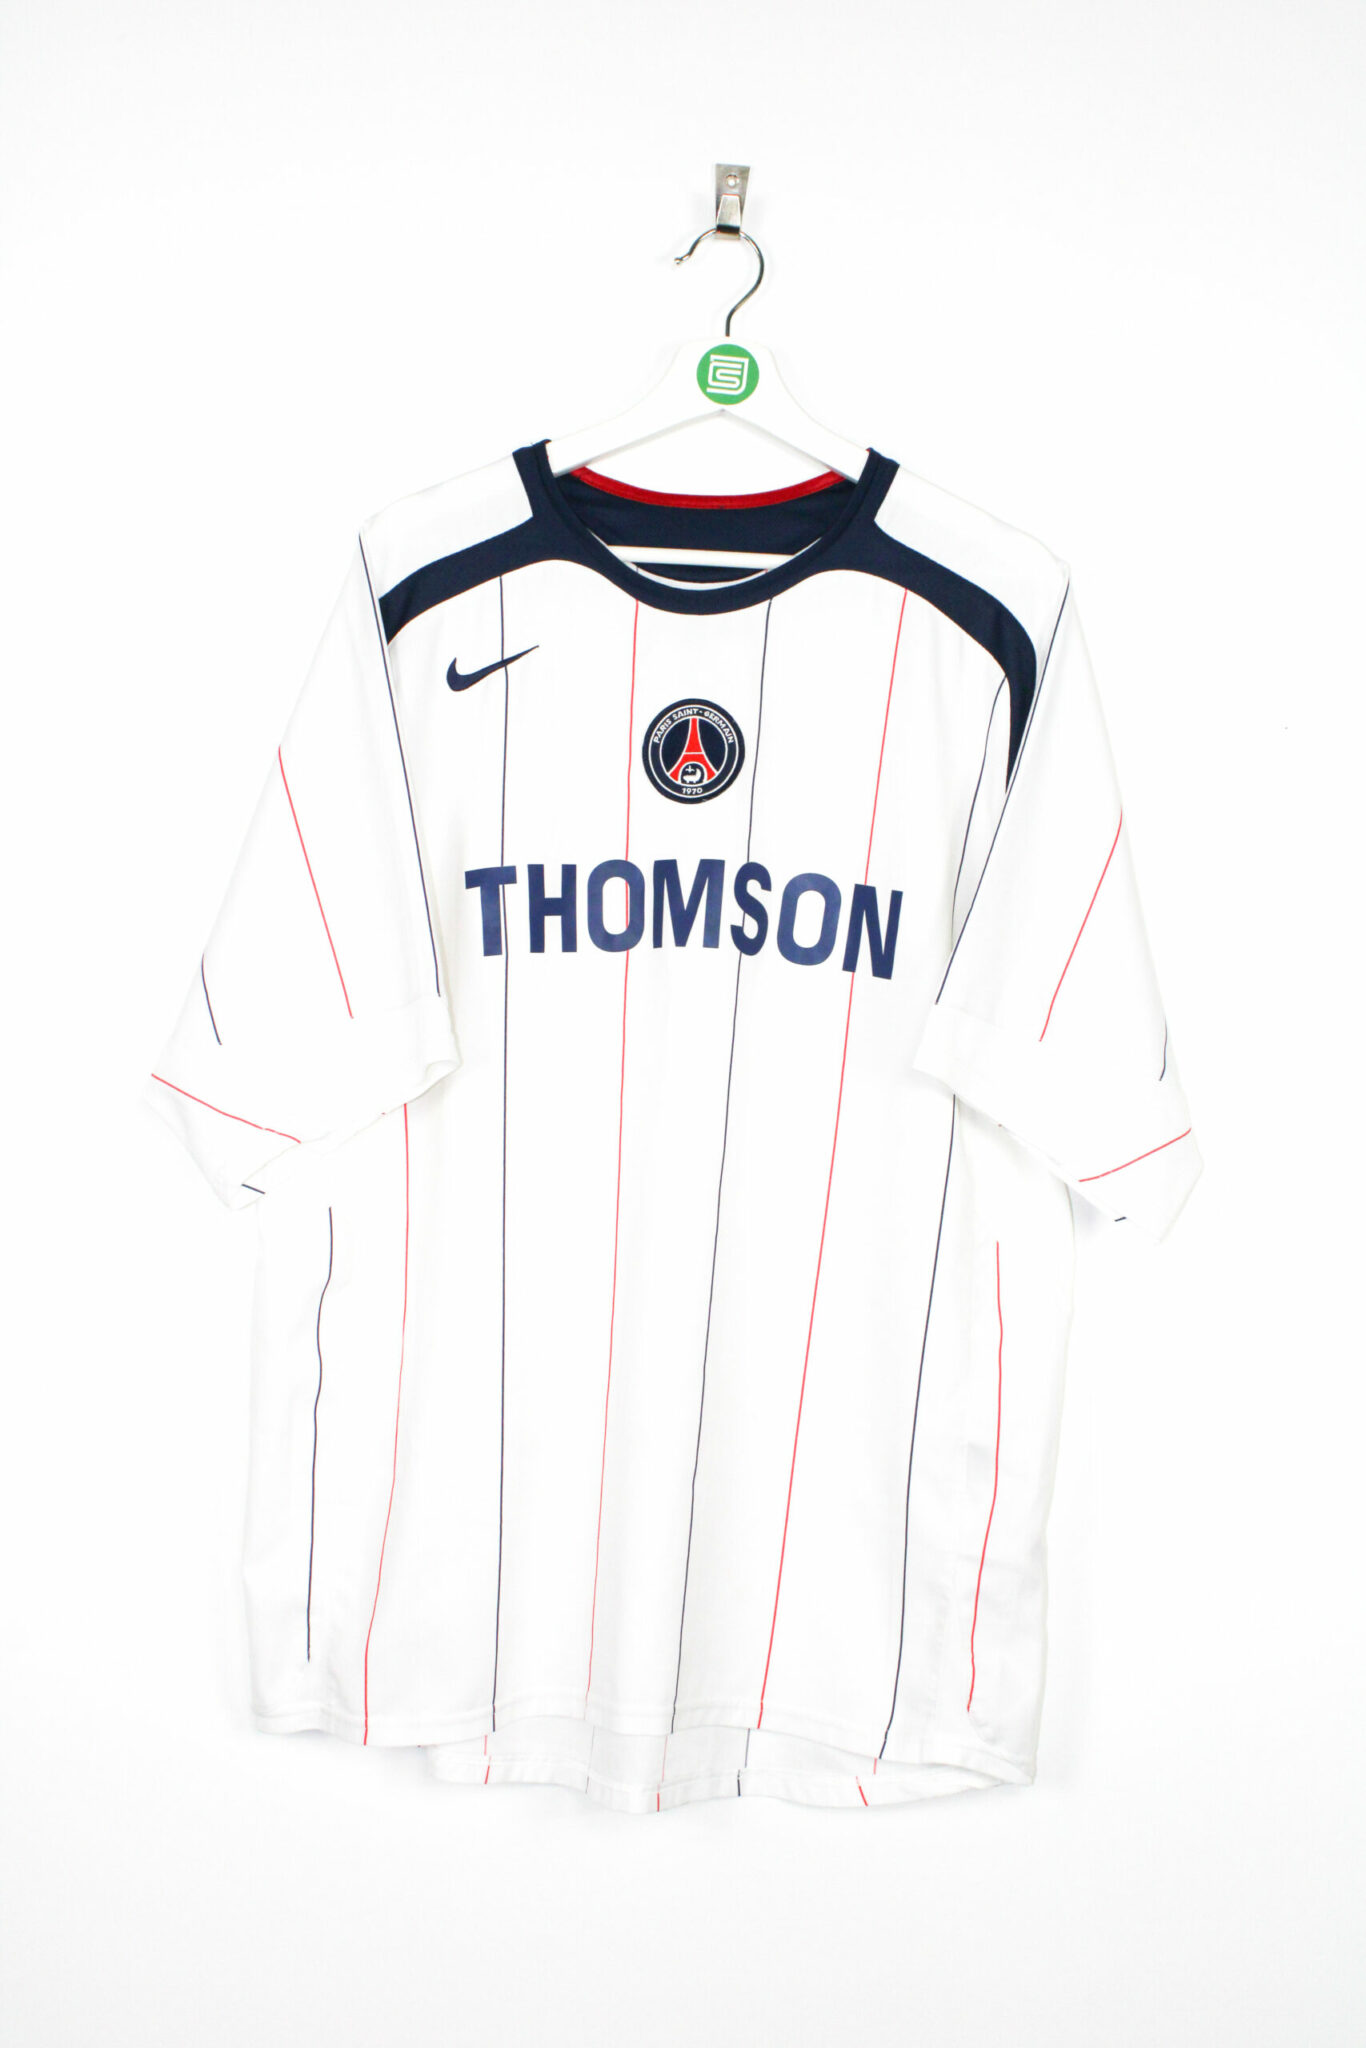 PSG Paris Saint-Germain 2006-07 Away Football Shirt SIZE L